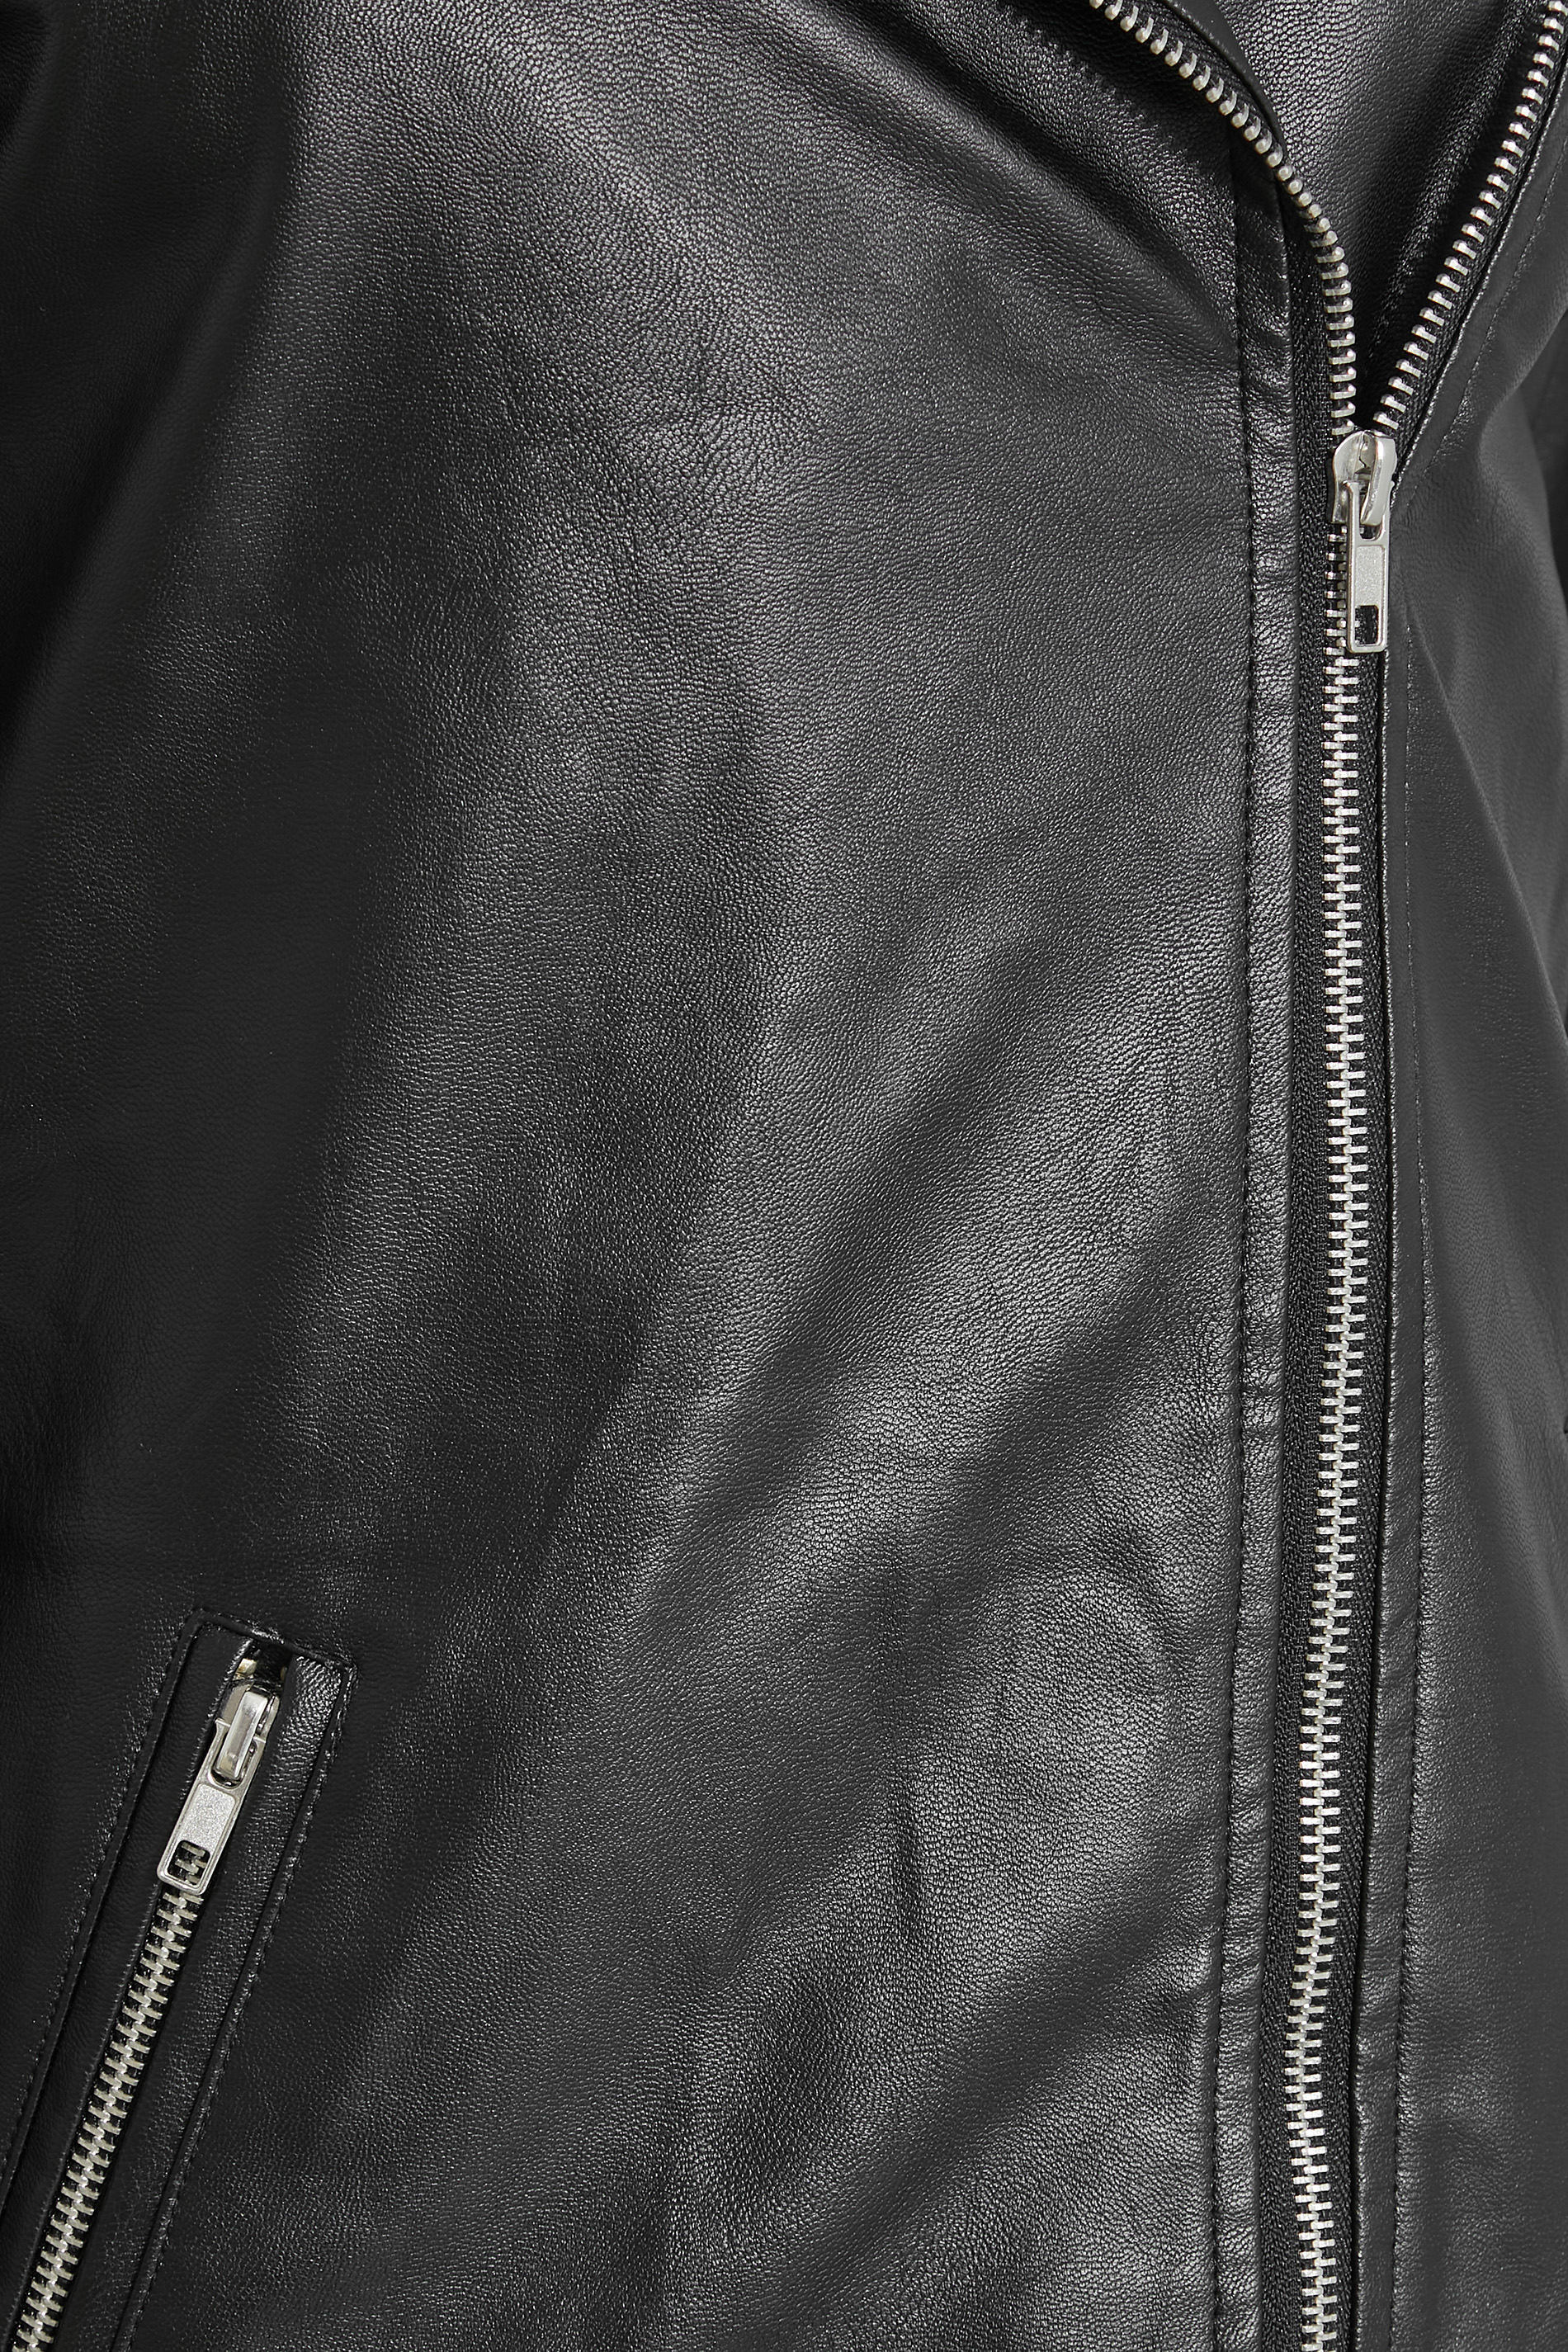 LTS Tall Women's Faux Leather Biker Jacket | Long Tall Sally 1